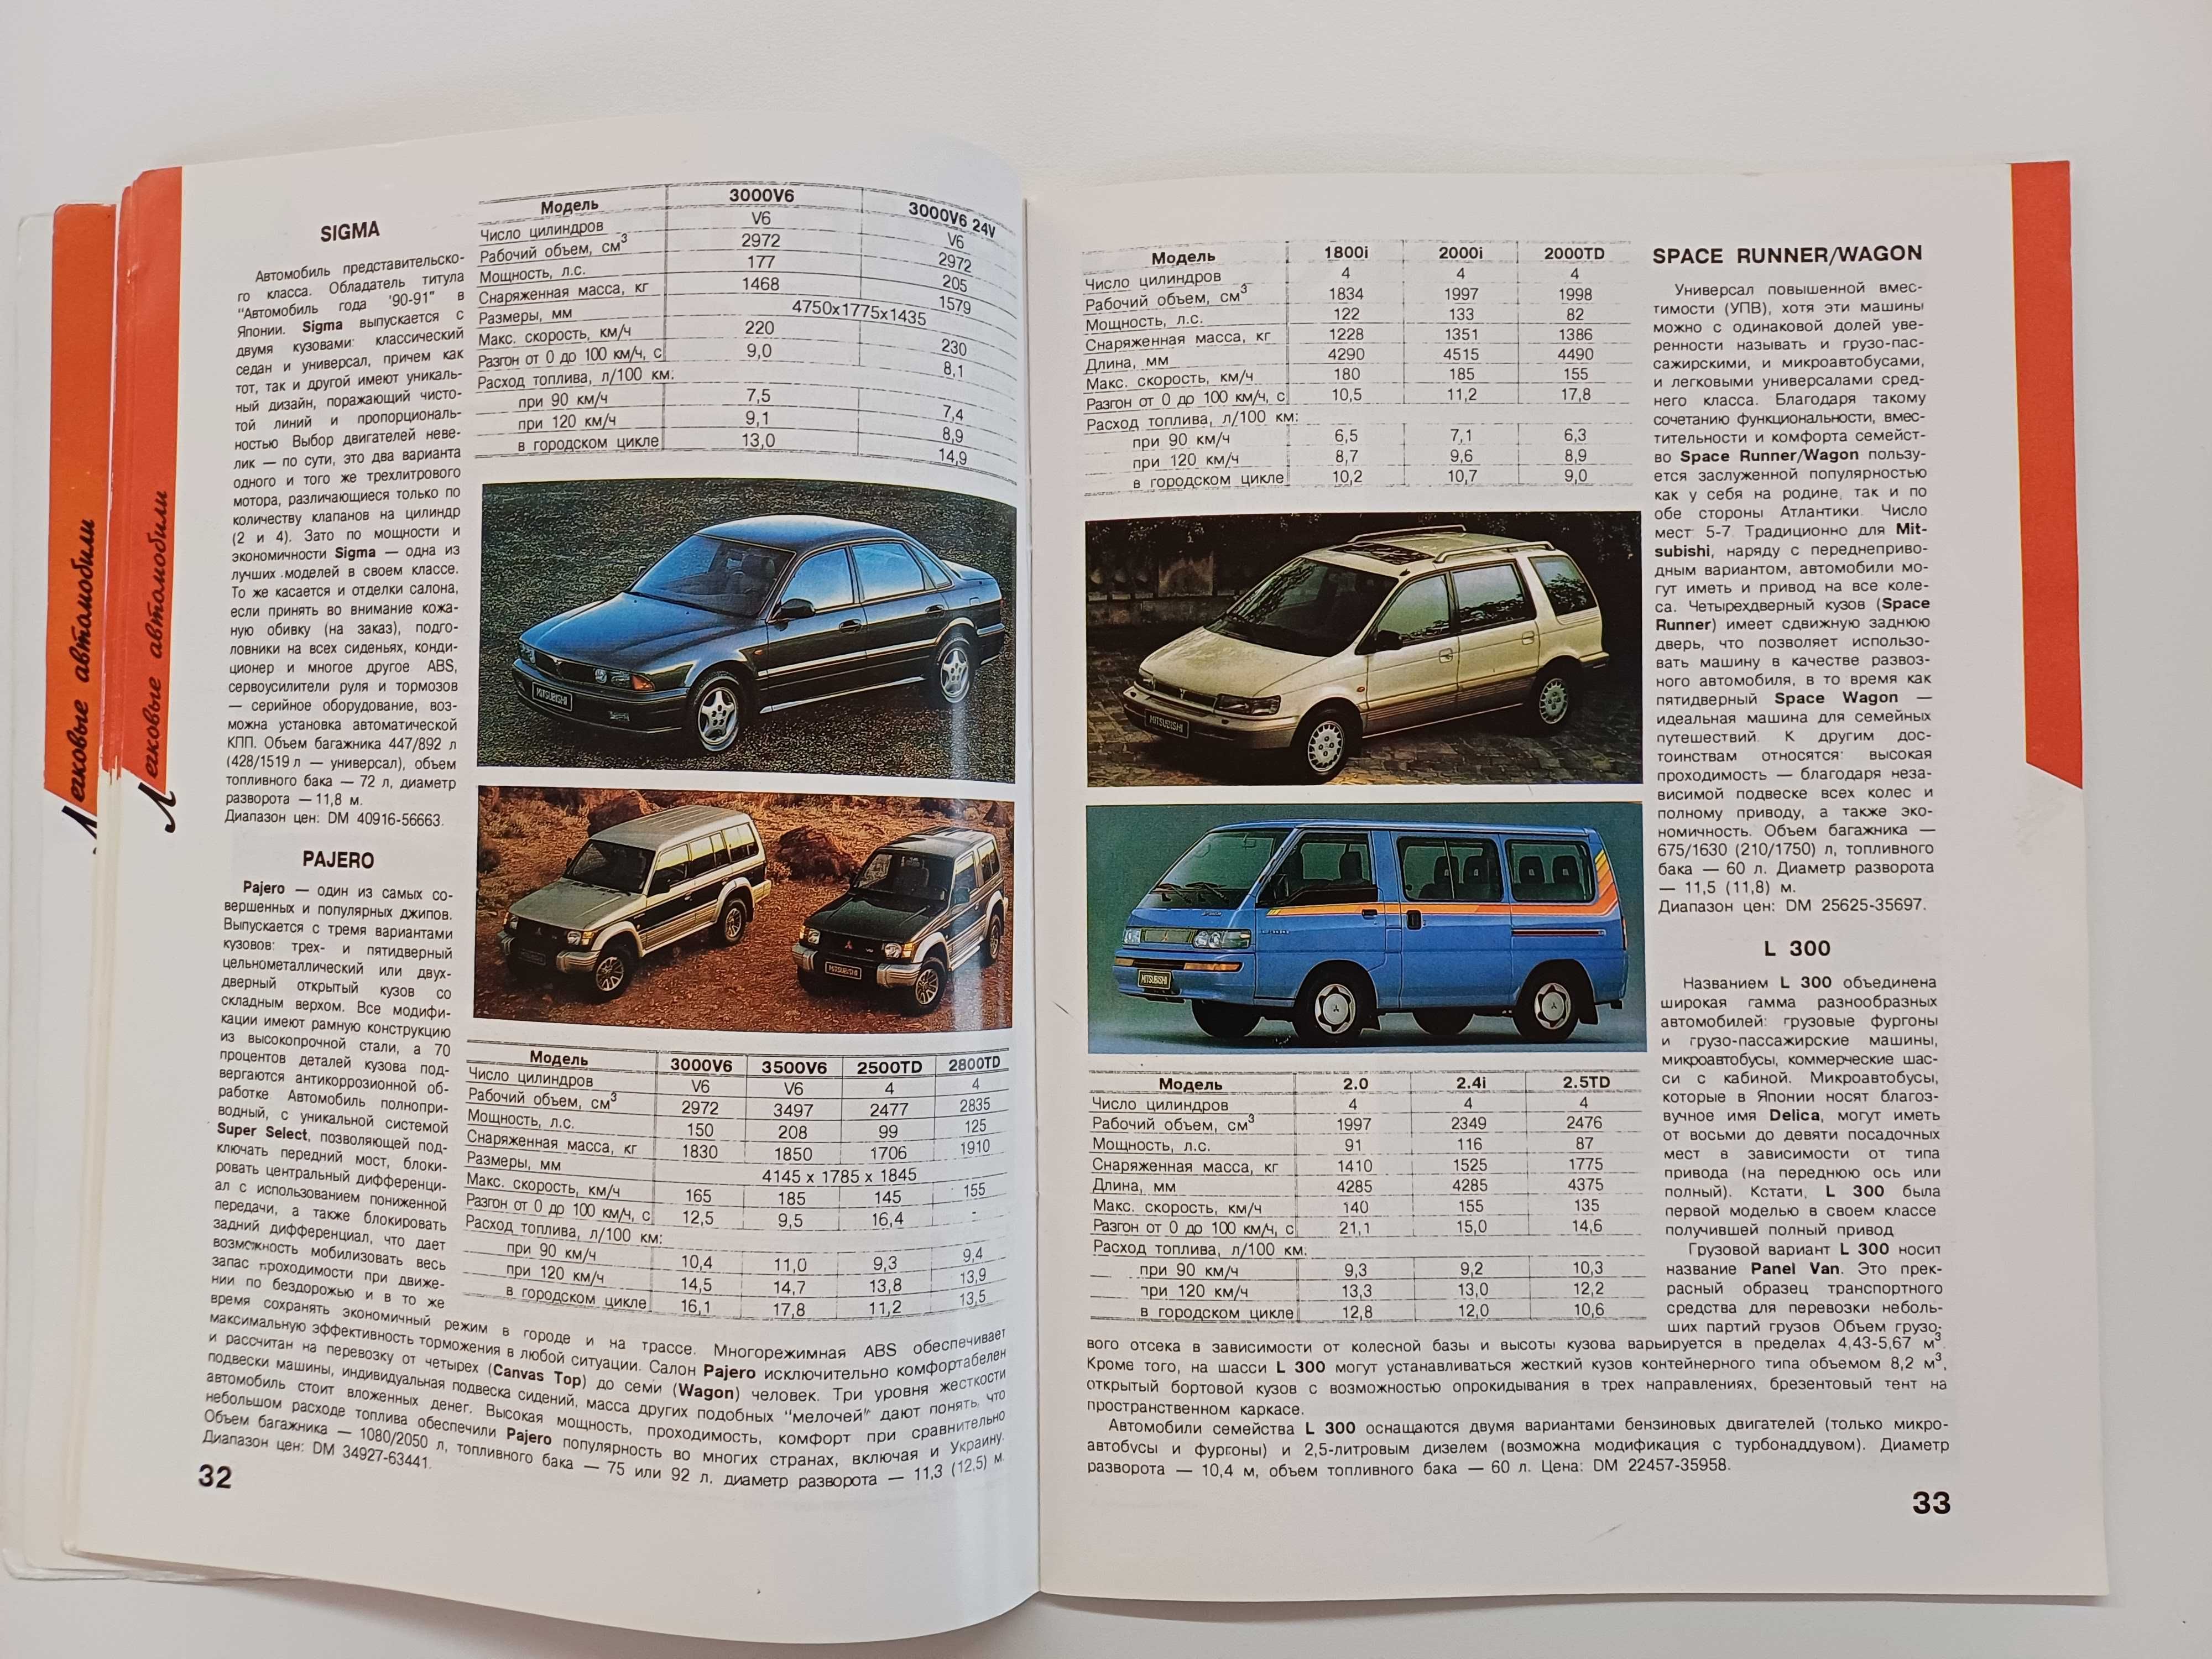 Каталог Иномарки на дорогах Украины 1995г, журнал Сигнал